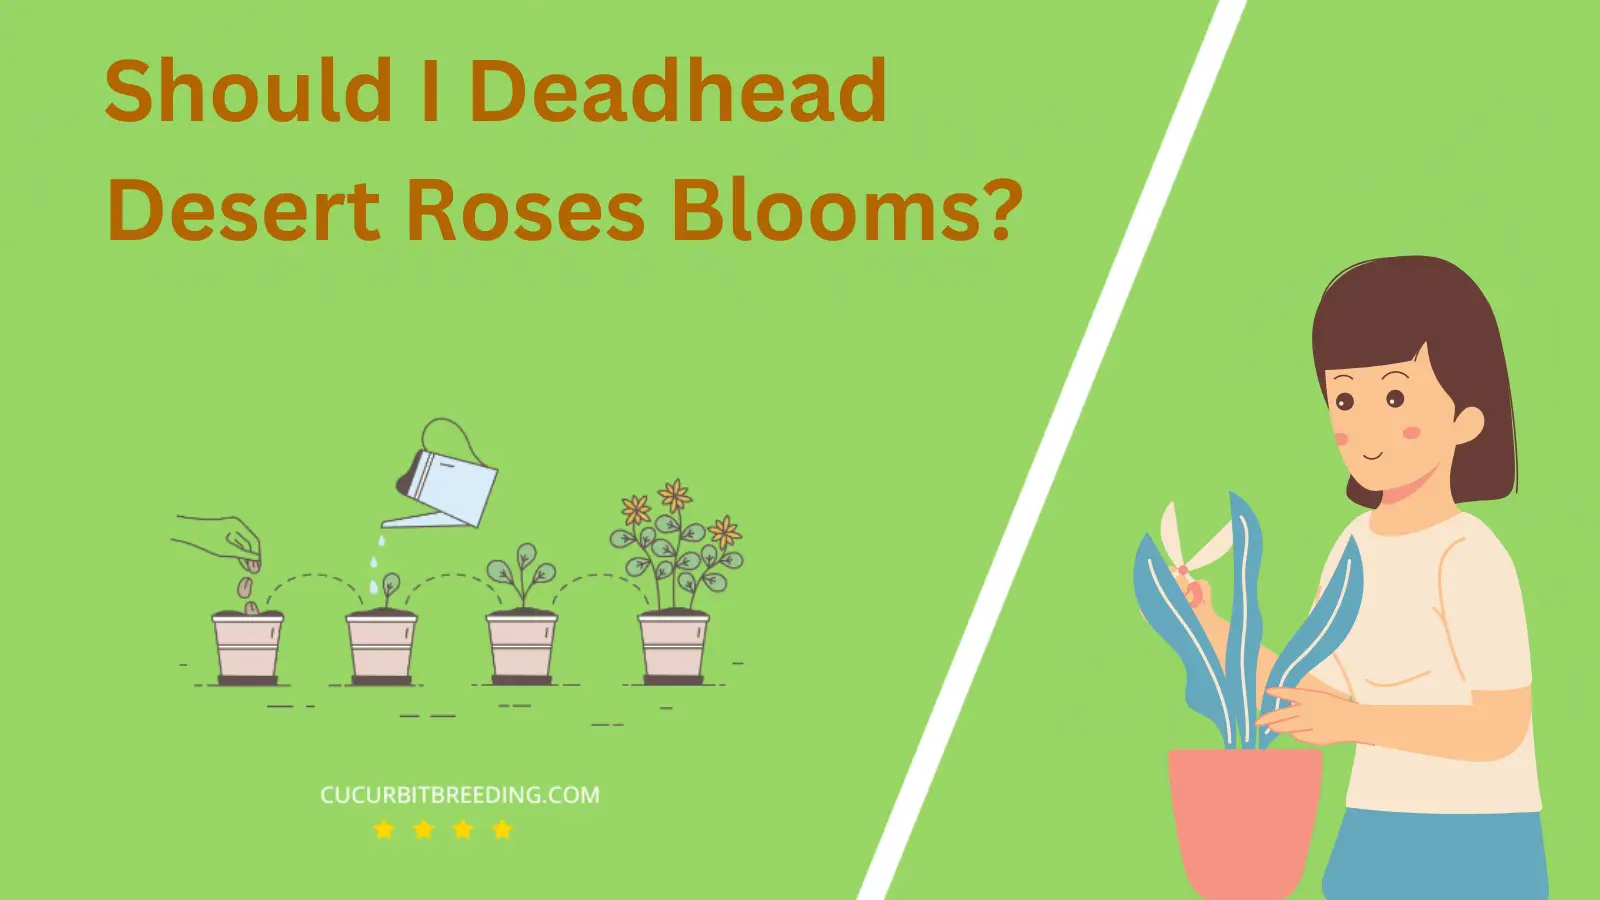 Should I Deadhead Desert Roses Blooms?